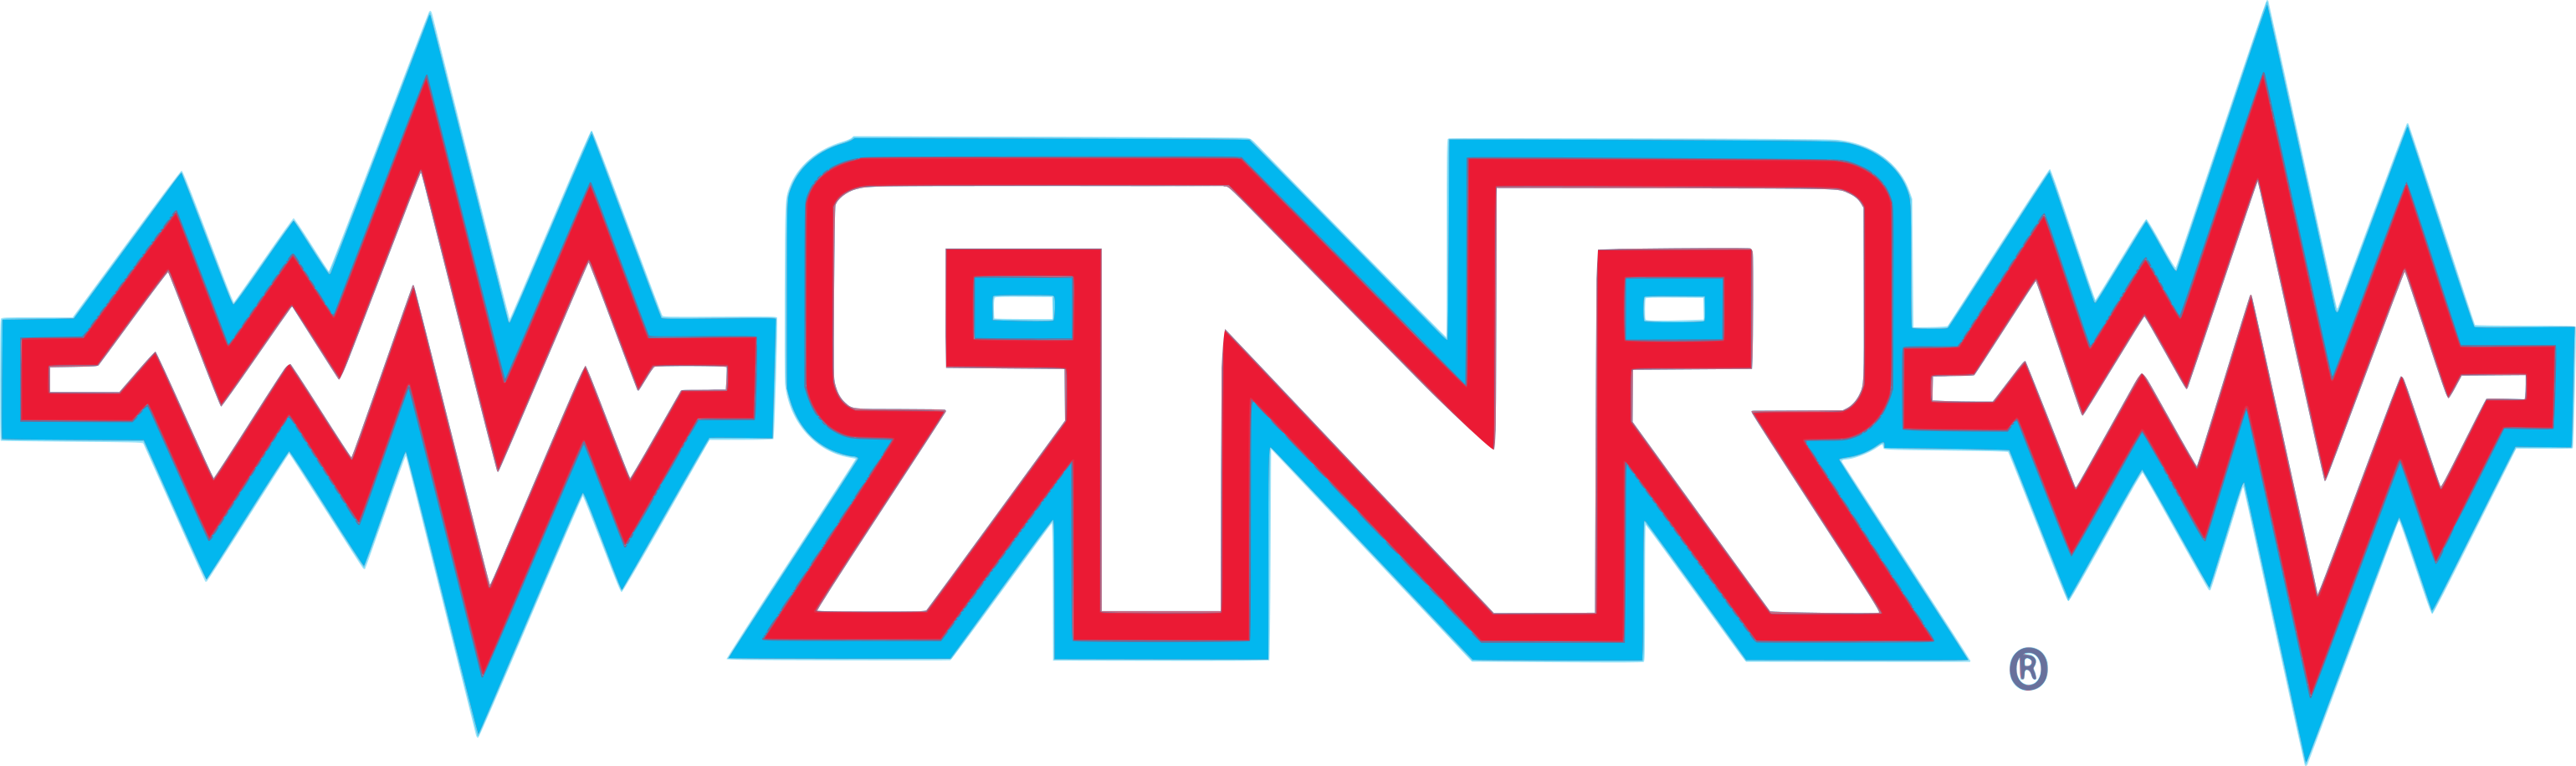 RNR Logo